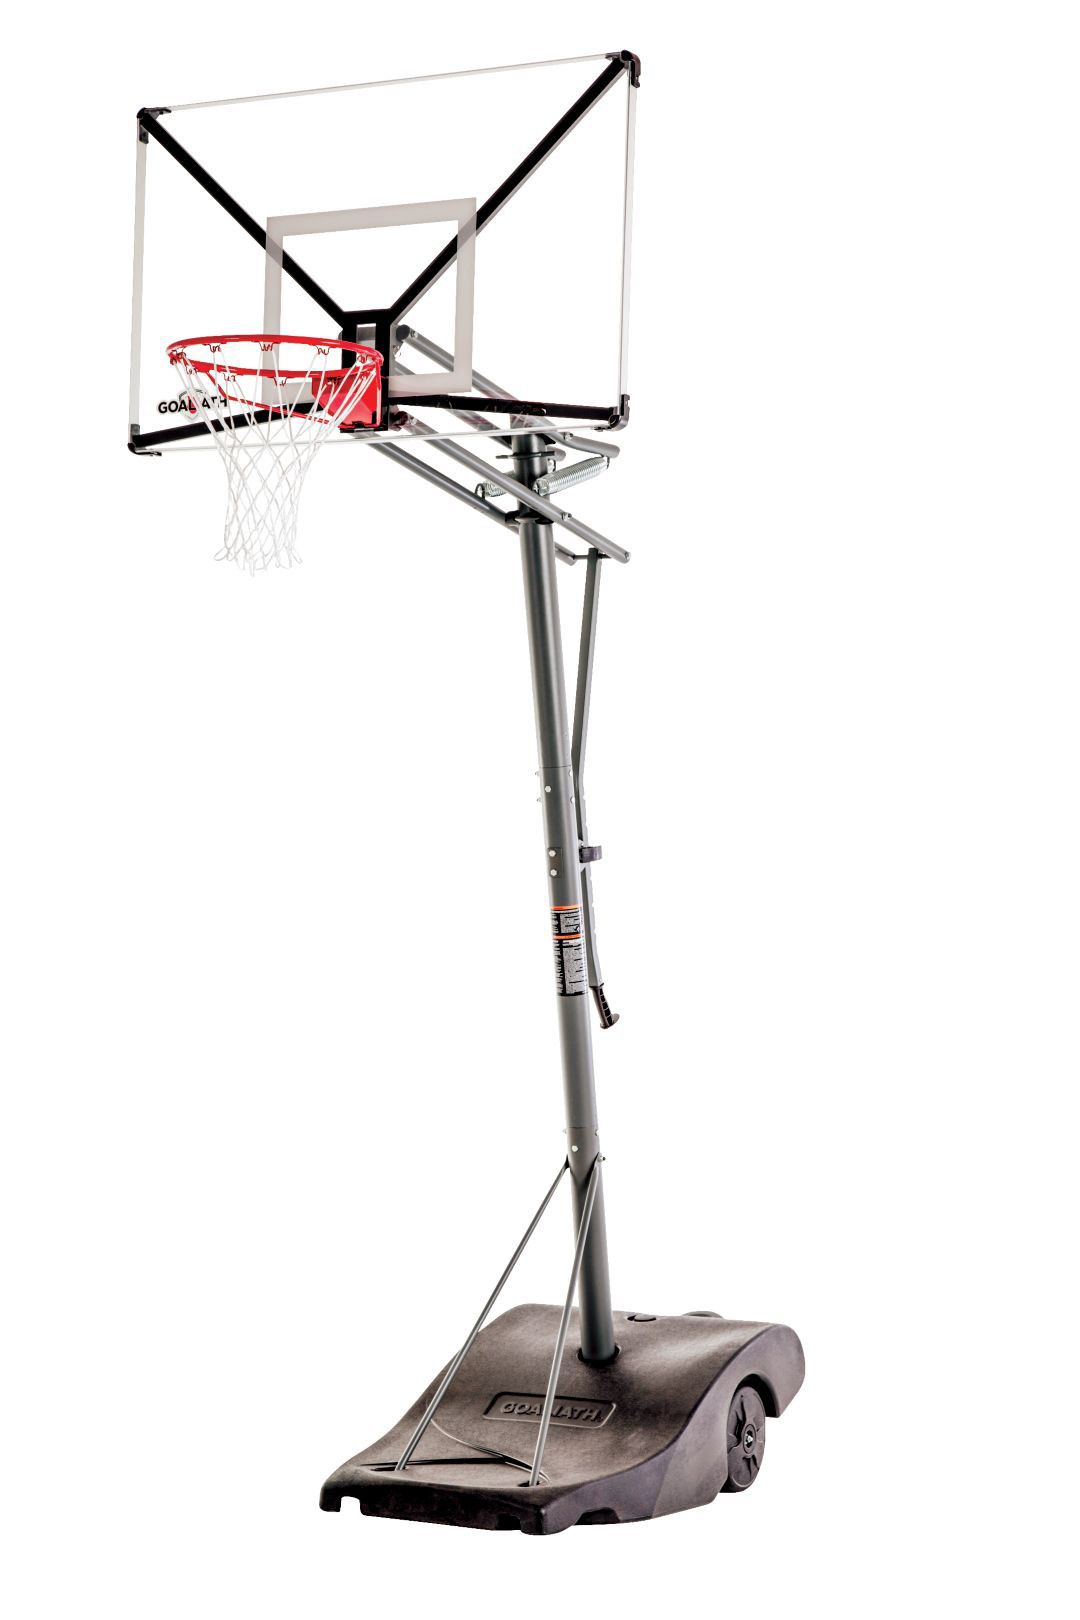 Goaliath 54'' GoTek Portable Basketball Hoop